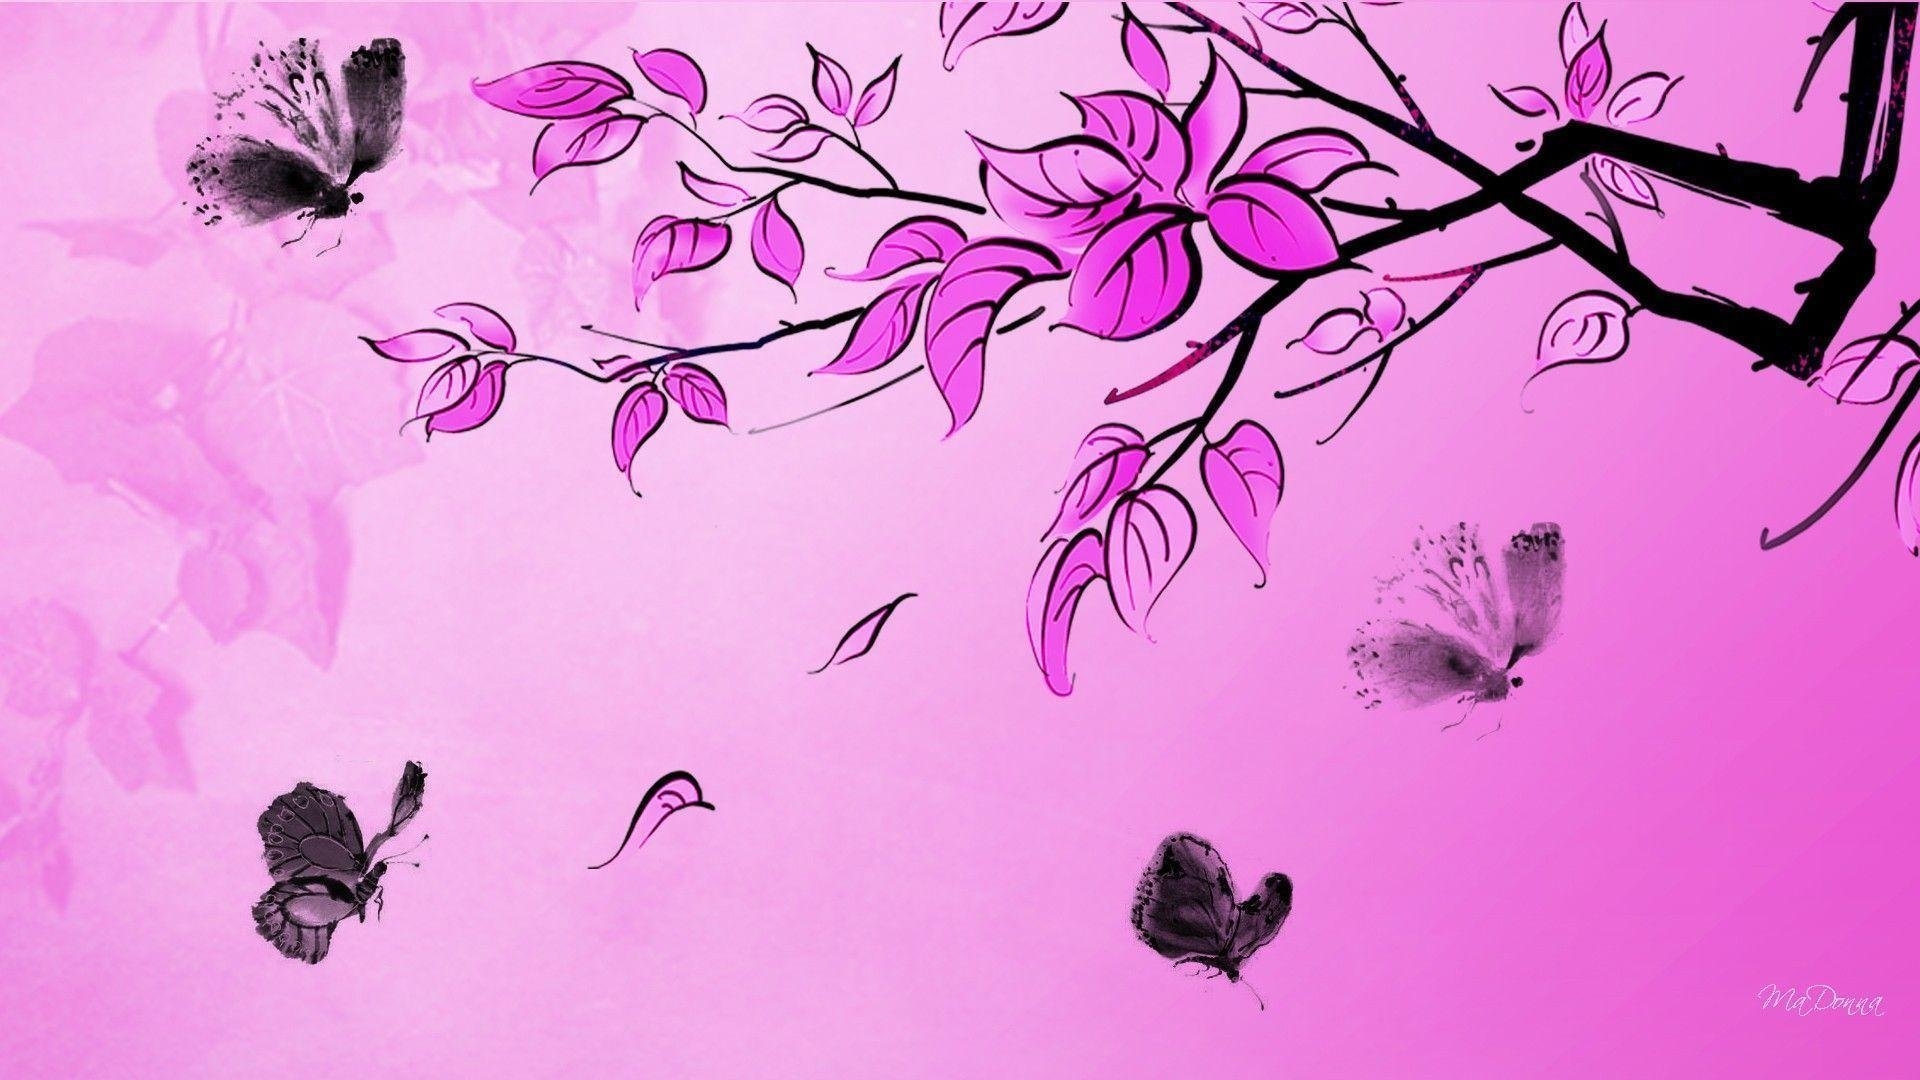 Рисунки на фон телефона. Фон бабочки. Красивый фон с бабочками. Розовый фон с бабочками. Фон для рисунка.